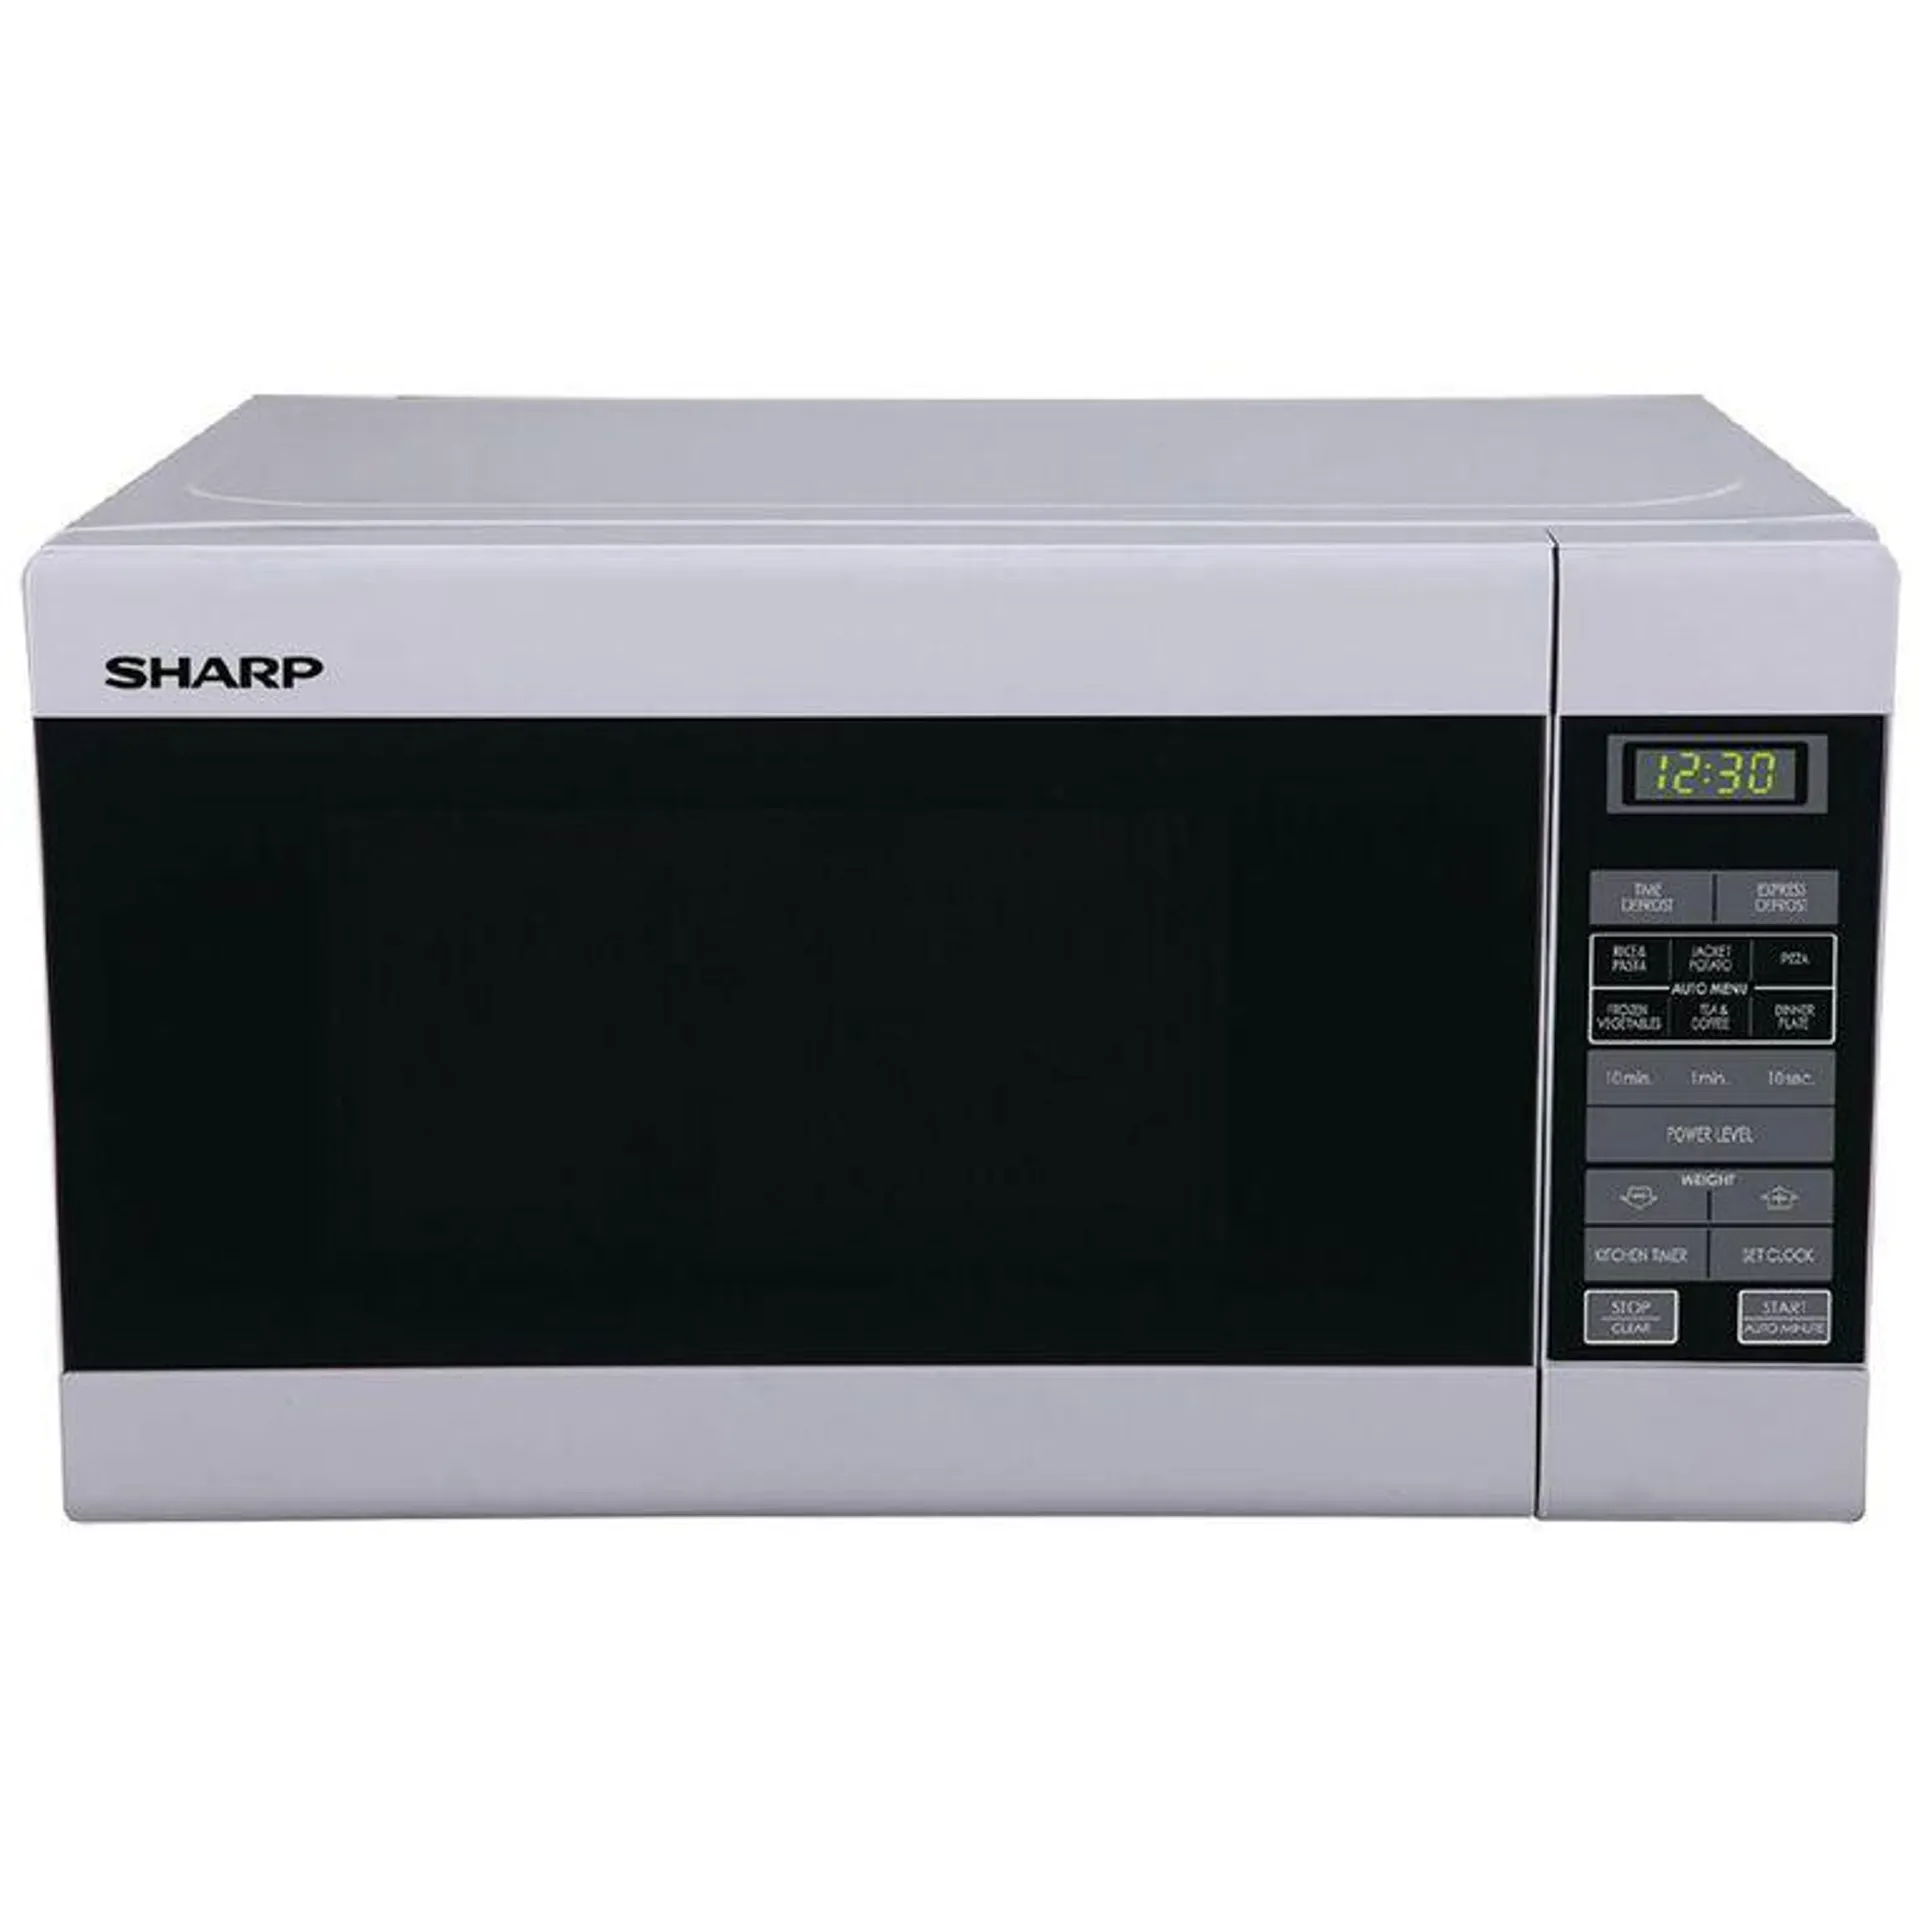 Sharp 20L Microwave - White